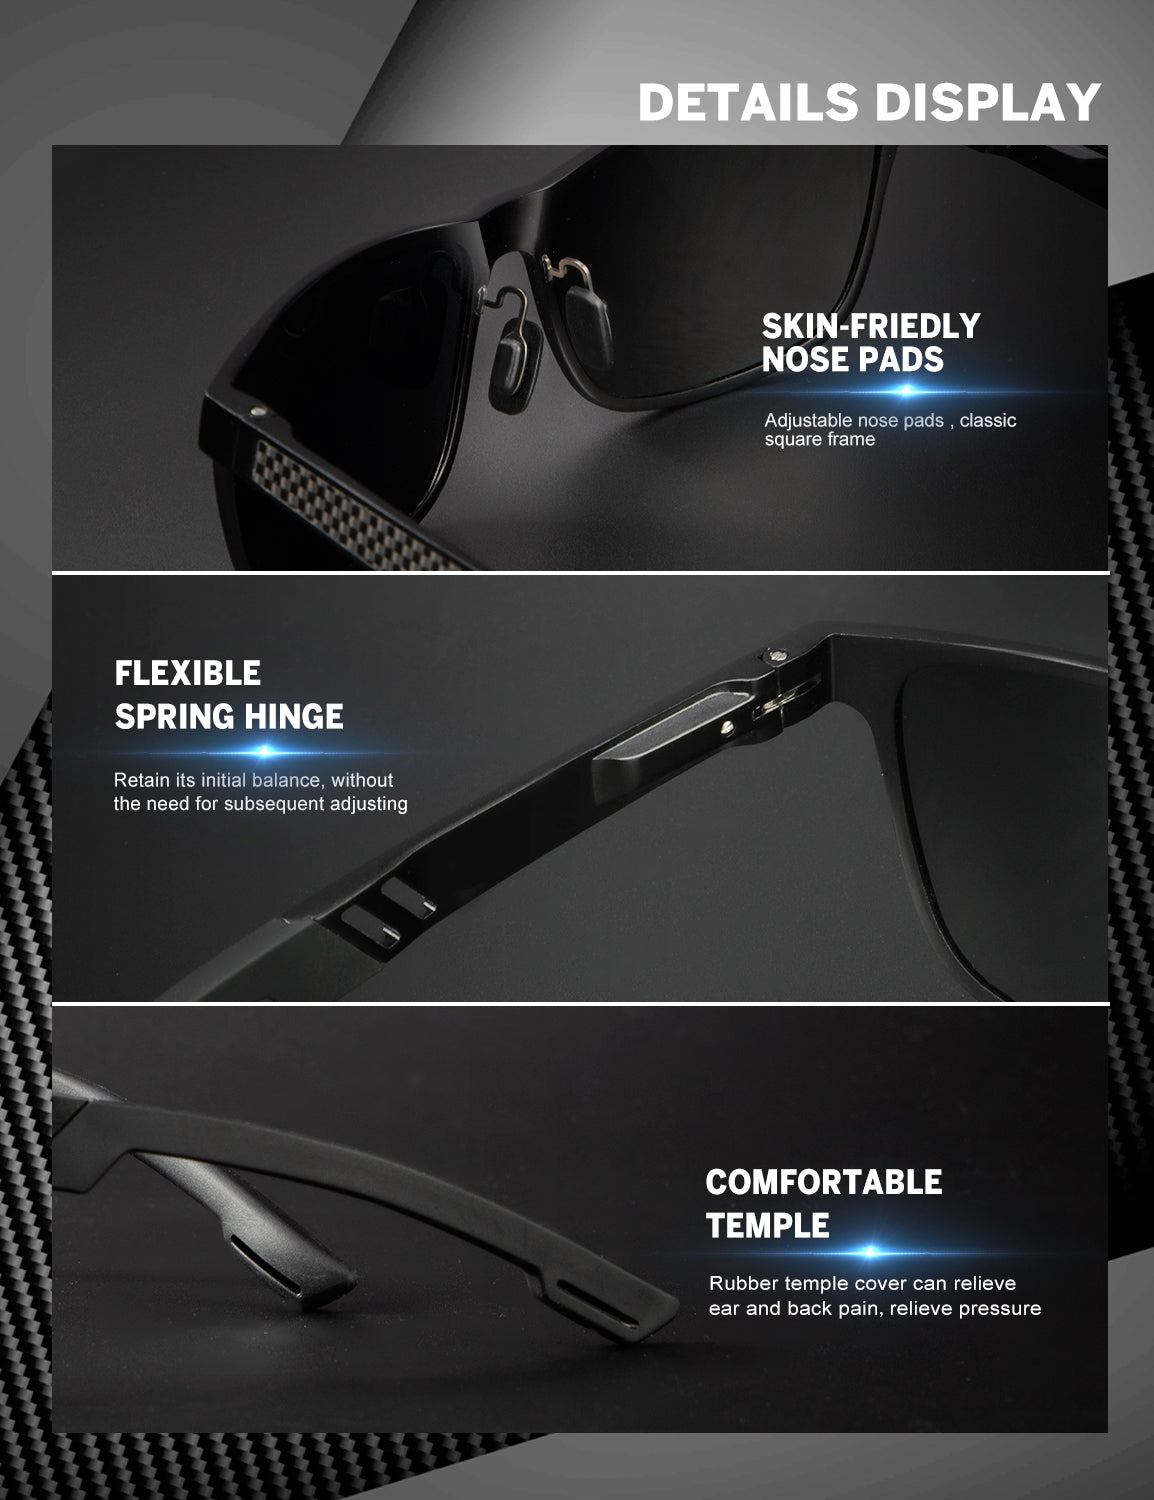 Al-Mg Metal Frame Sunglasses S53-4